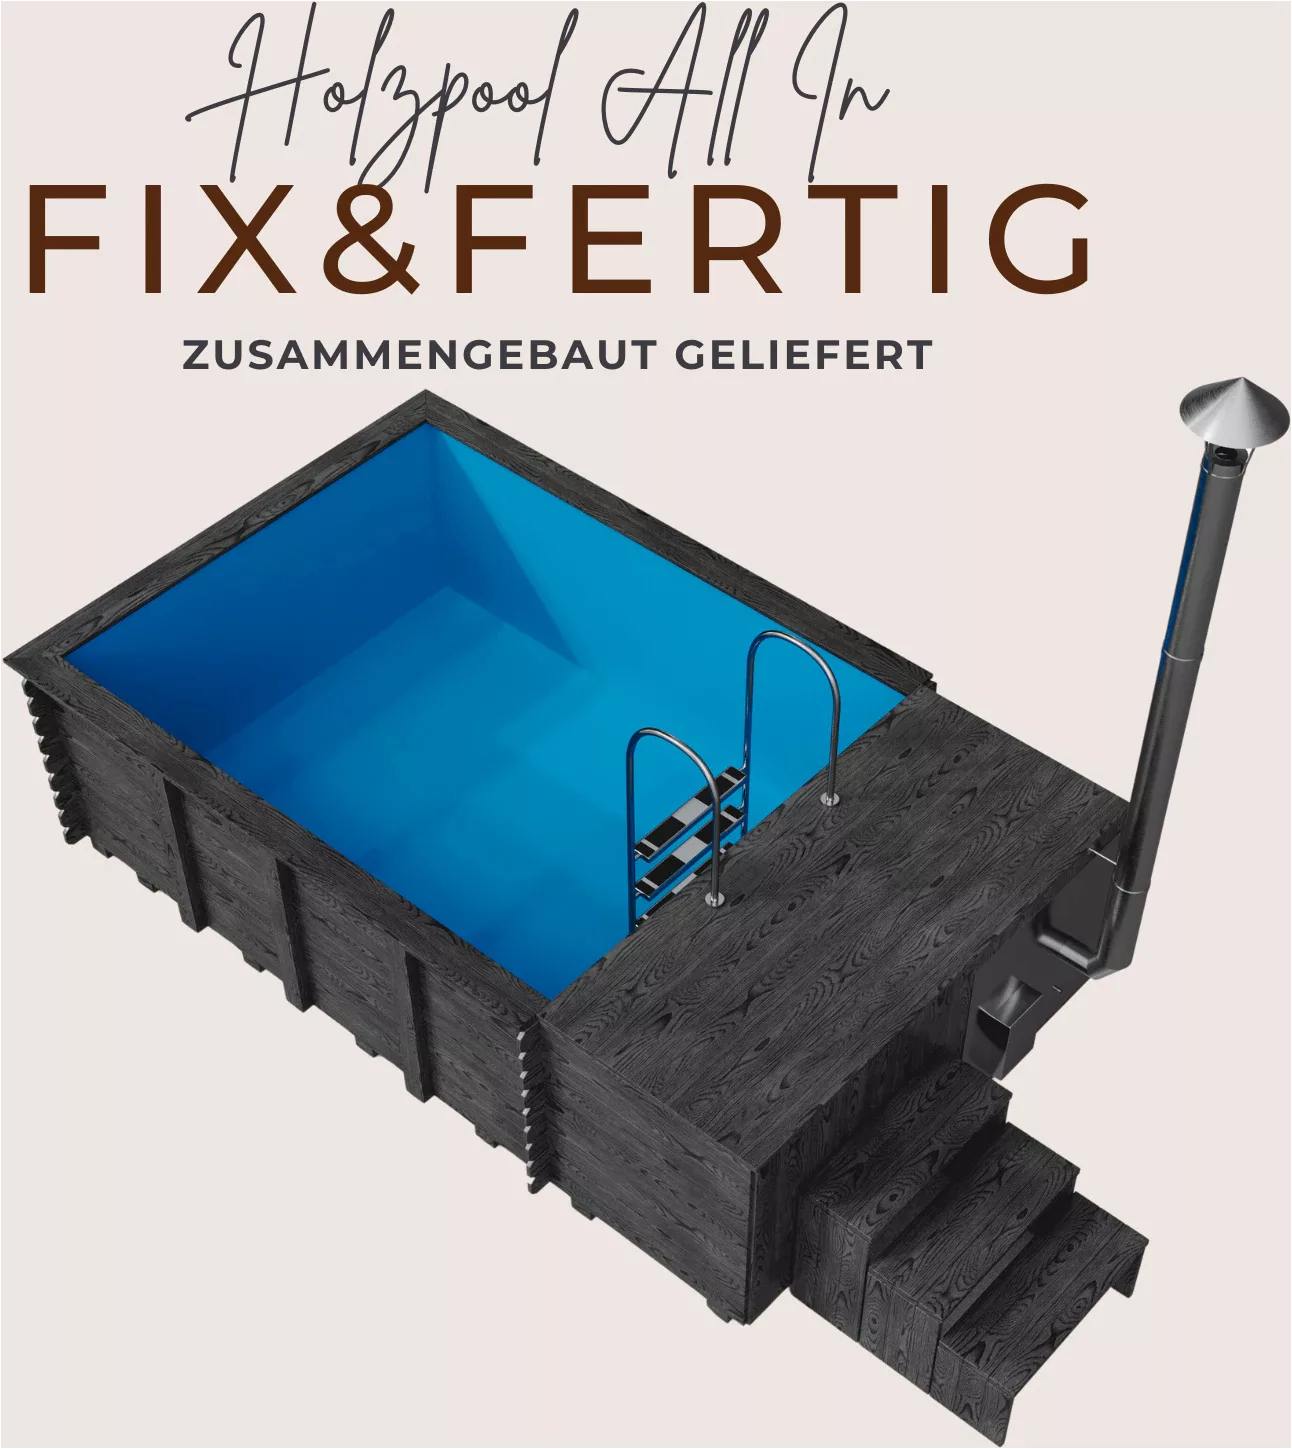 EDEN Holzmanufaktur Rechteckpool "Fix&Fertig All In", (Set, 6 tlg.), inkl. günstig online kaufen